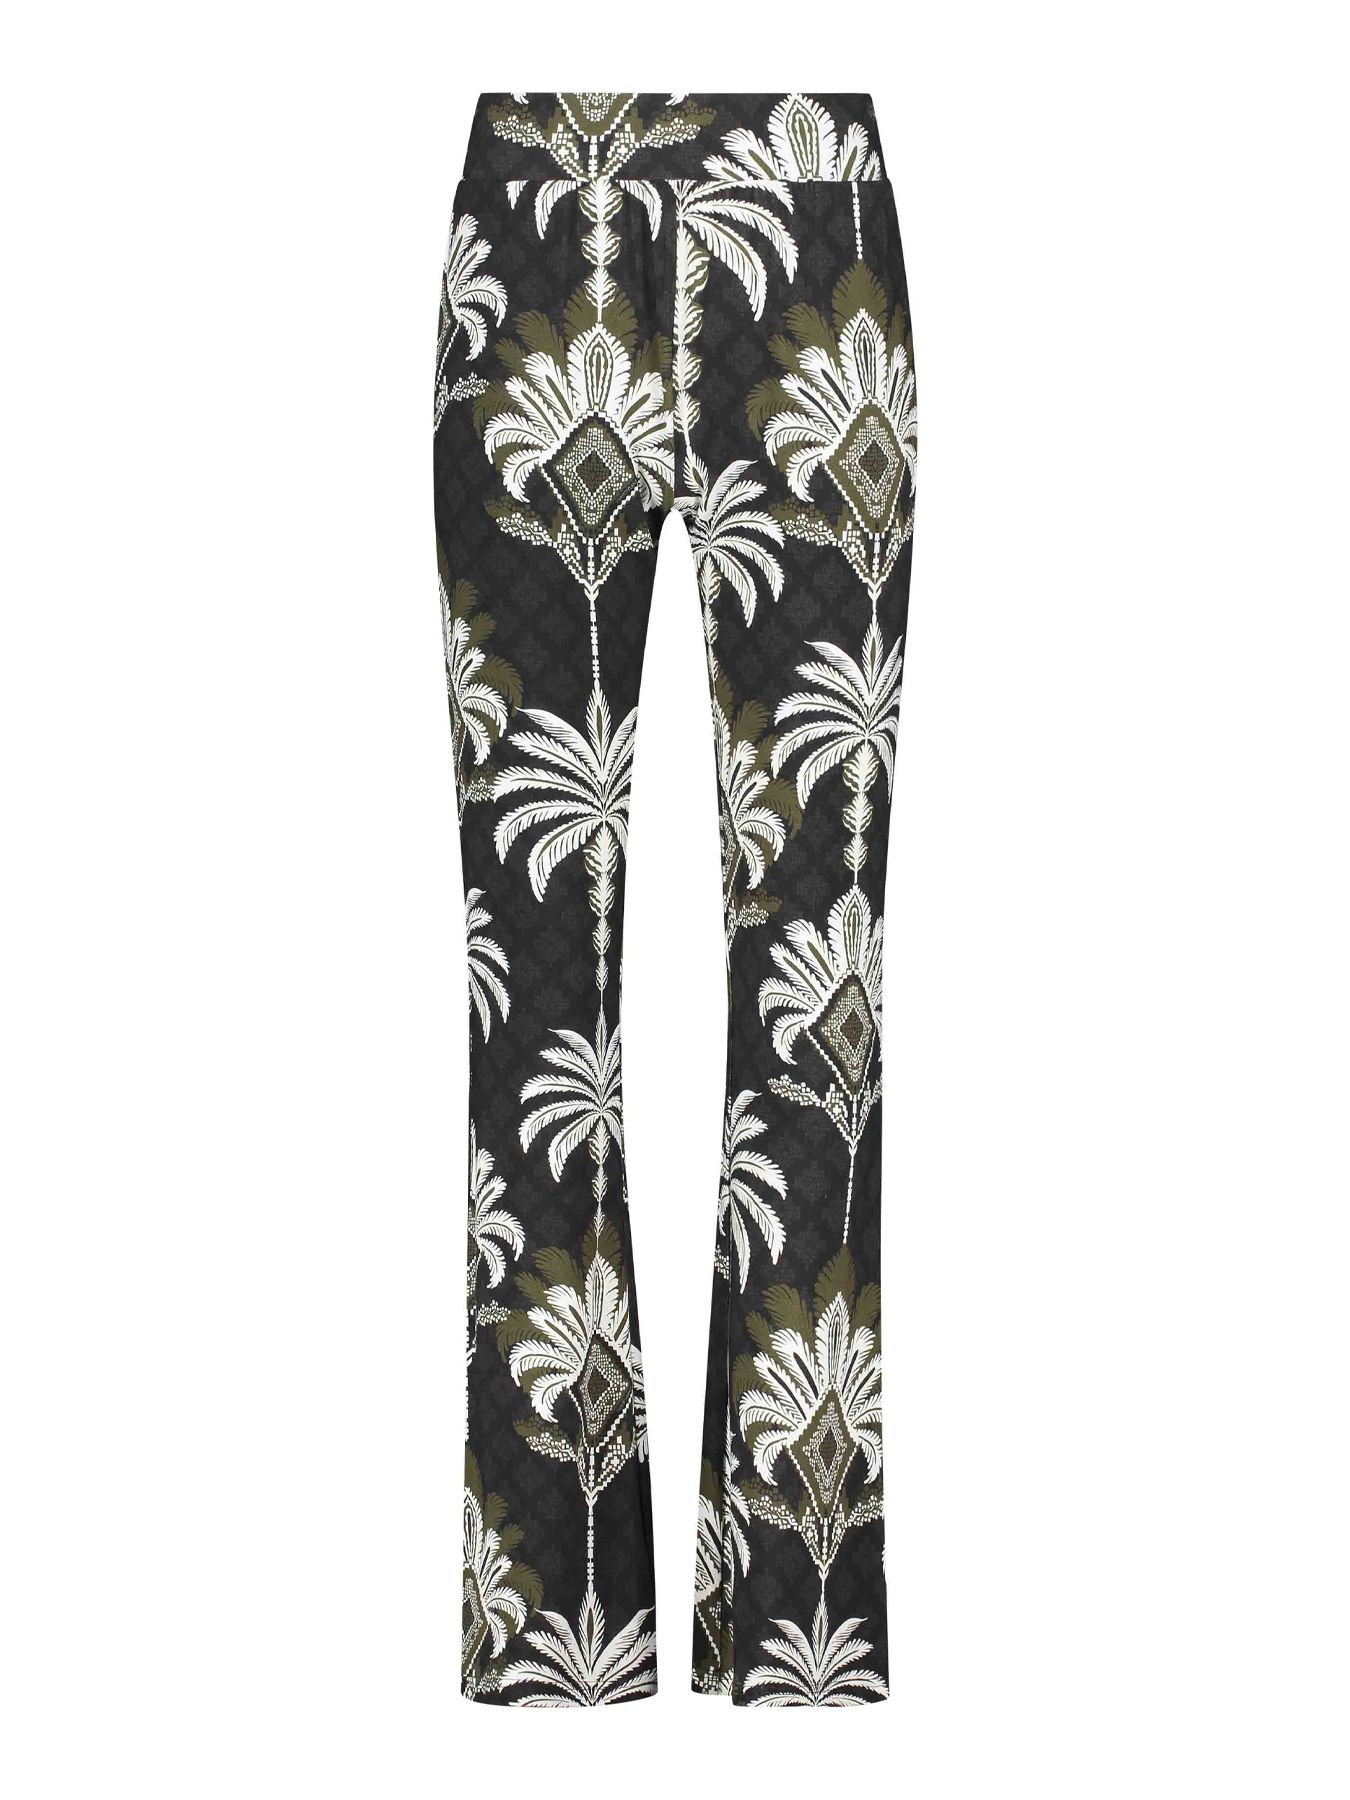 Tramontana Trousers Palm Print Blacks 009998 00106833-EKA26012900000002